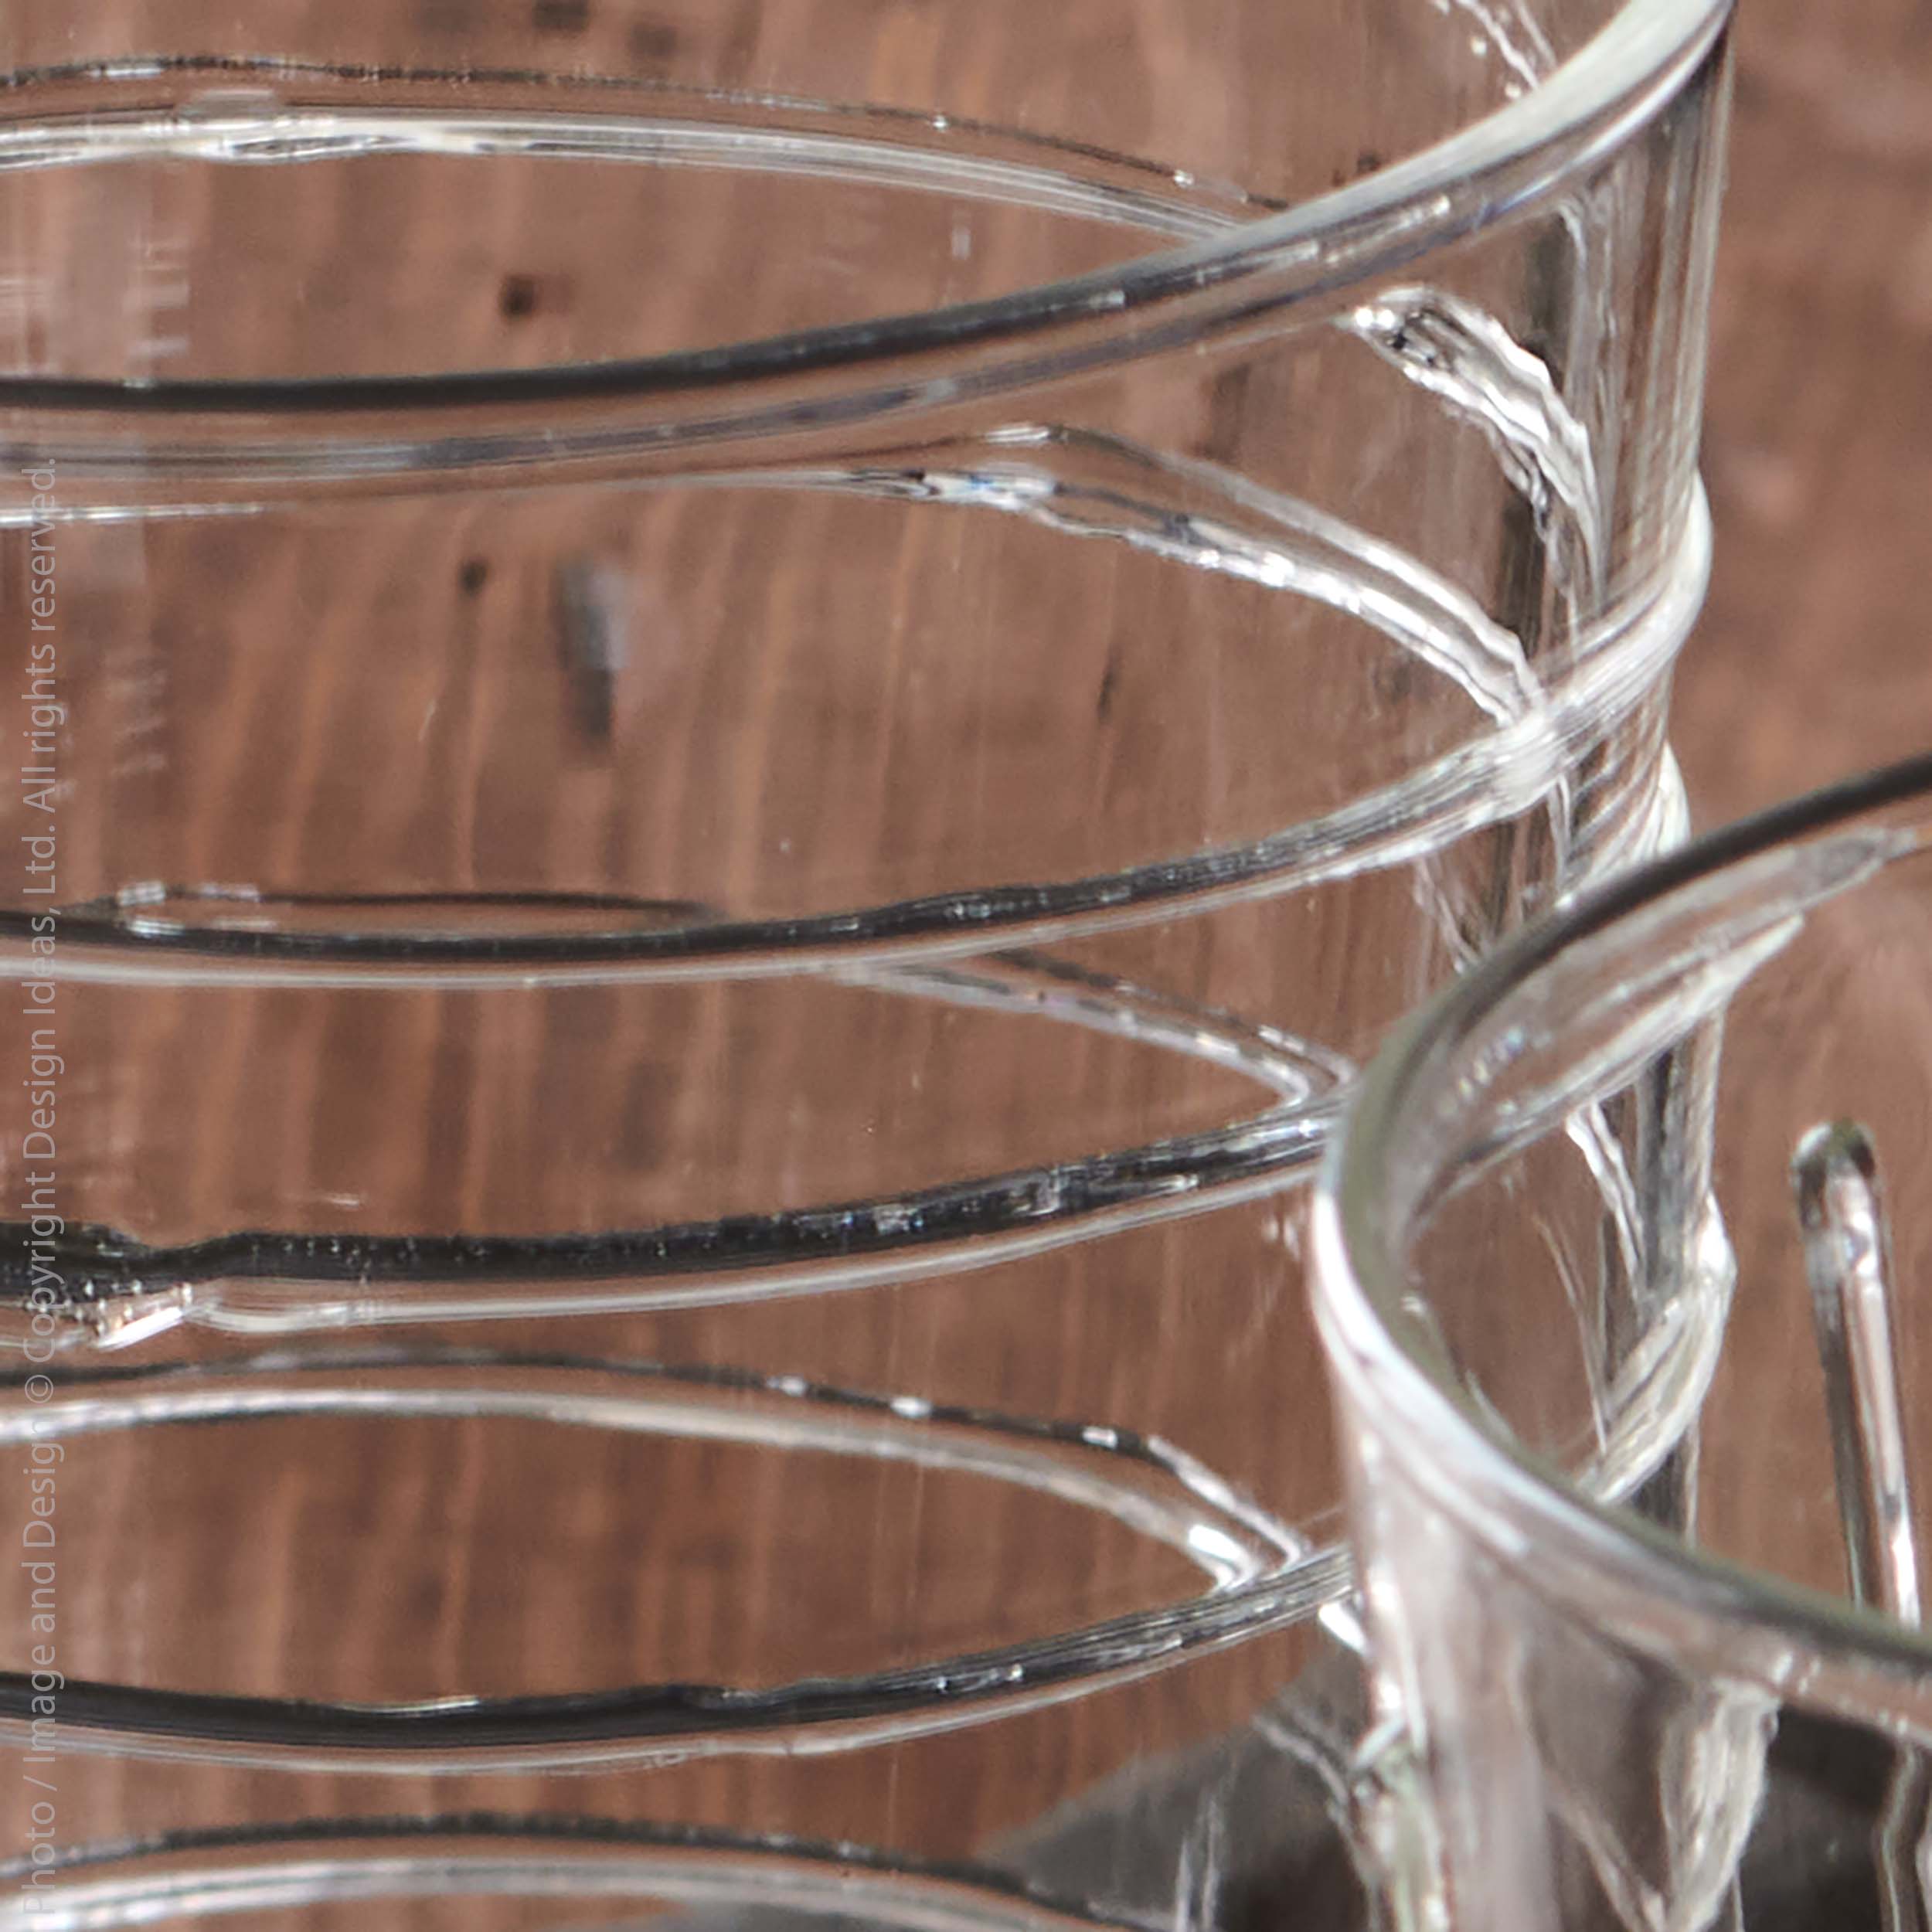 Livenza™ Borosilicate Glass Drinking Glasses (9.8 oz.: set of 6)